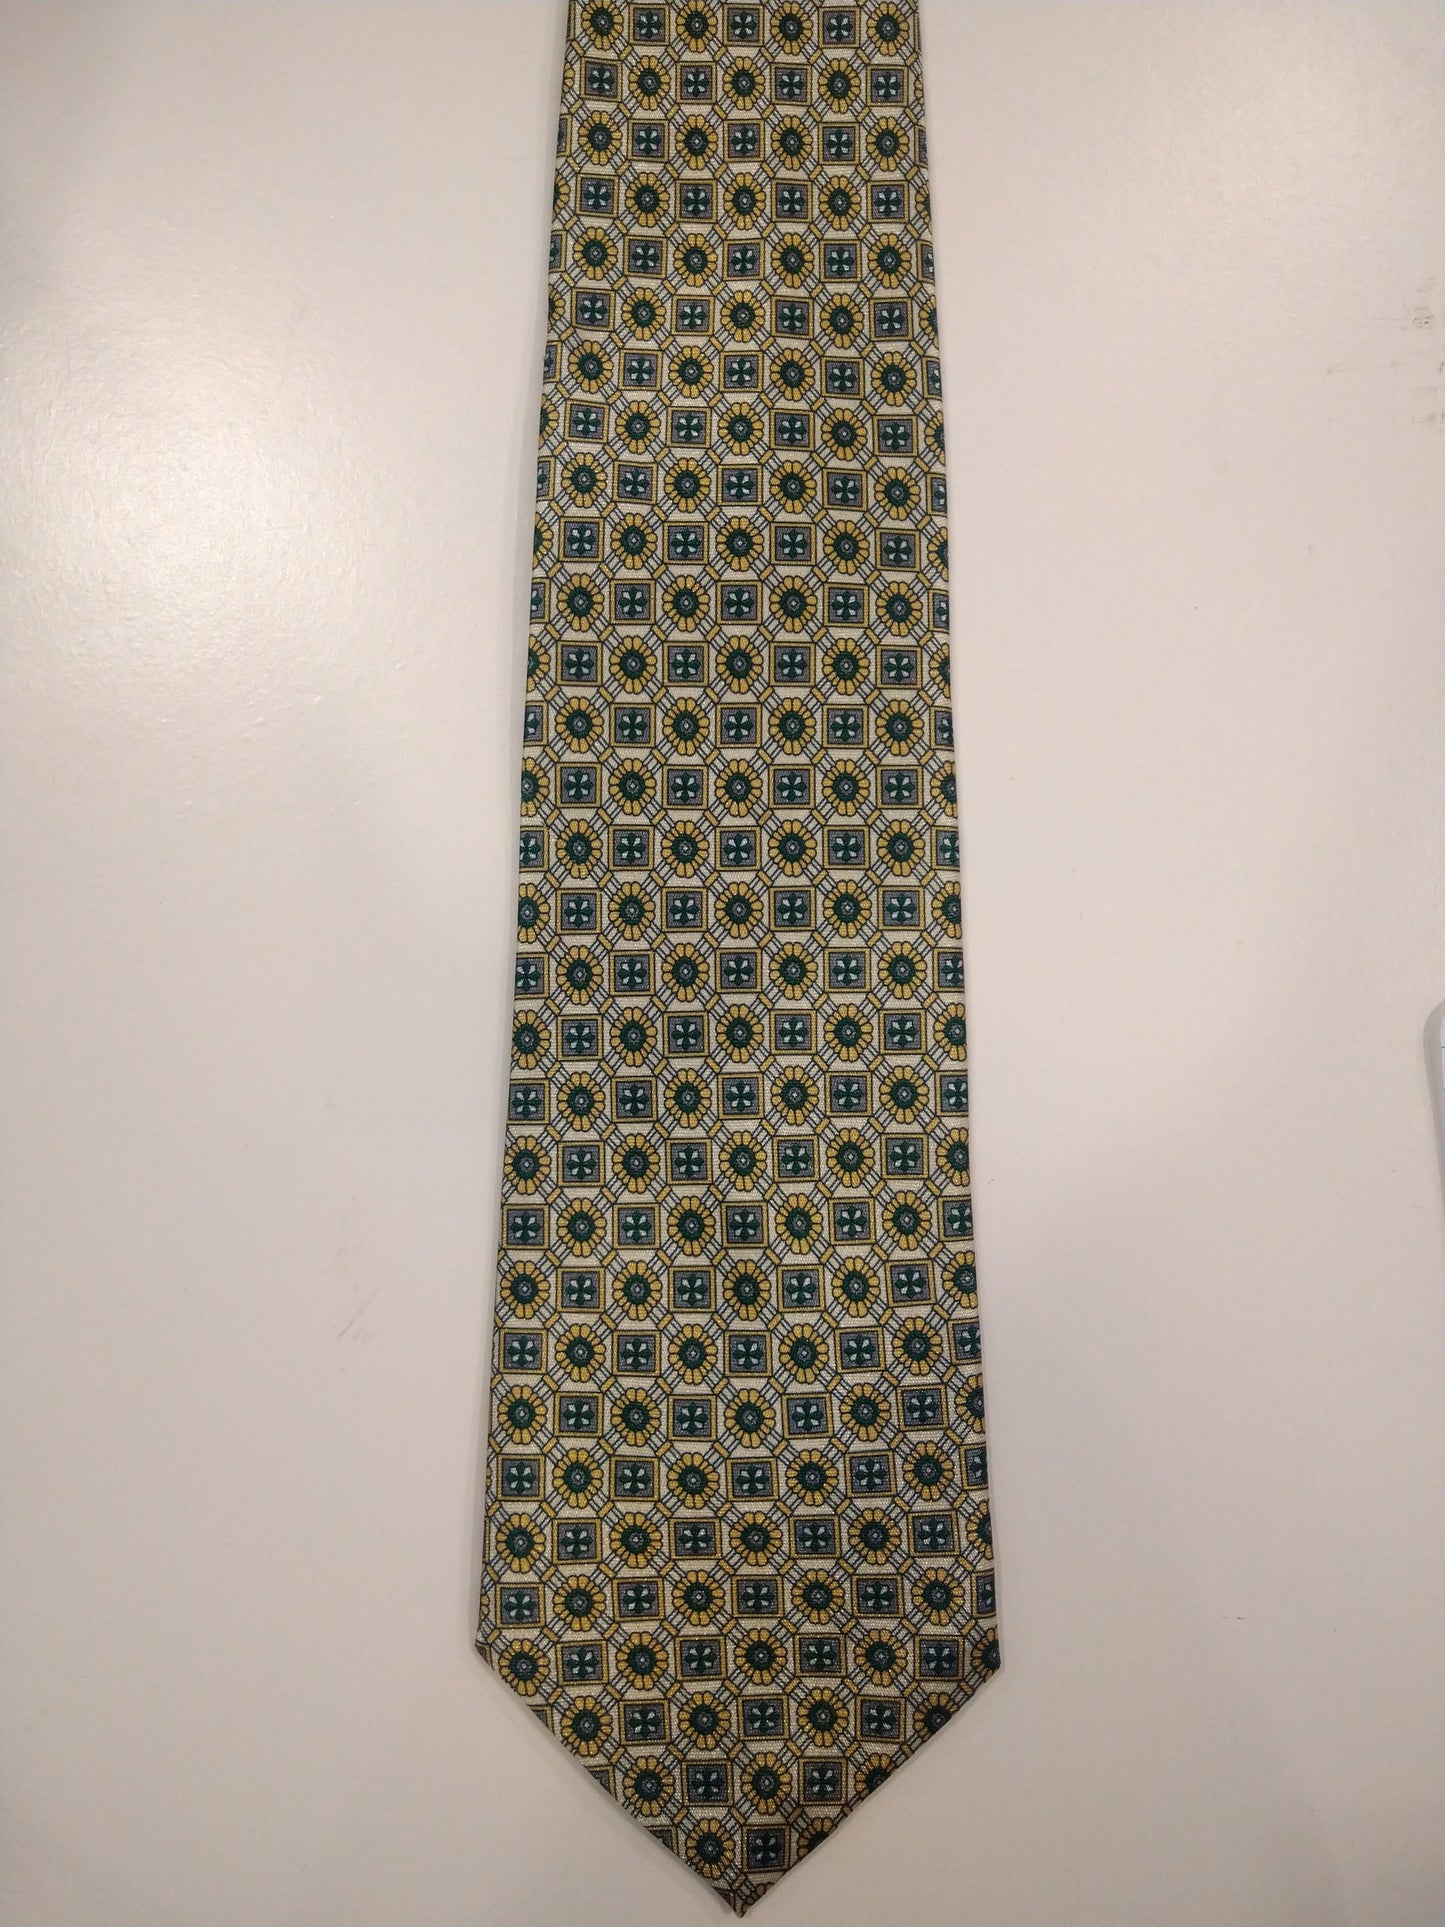 Jundipai la corbata de poliéster suave. Green beige Gold Motif brillante.